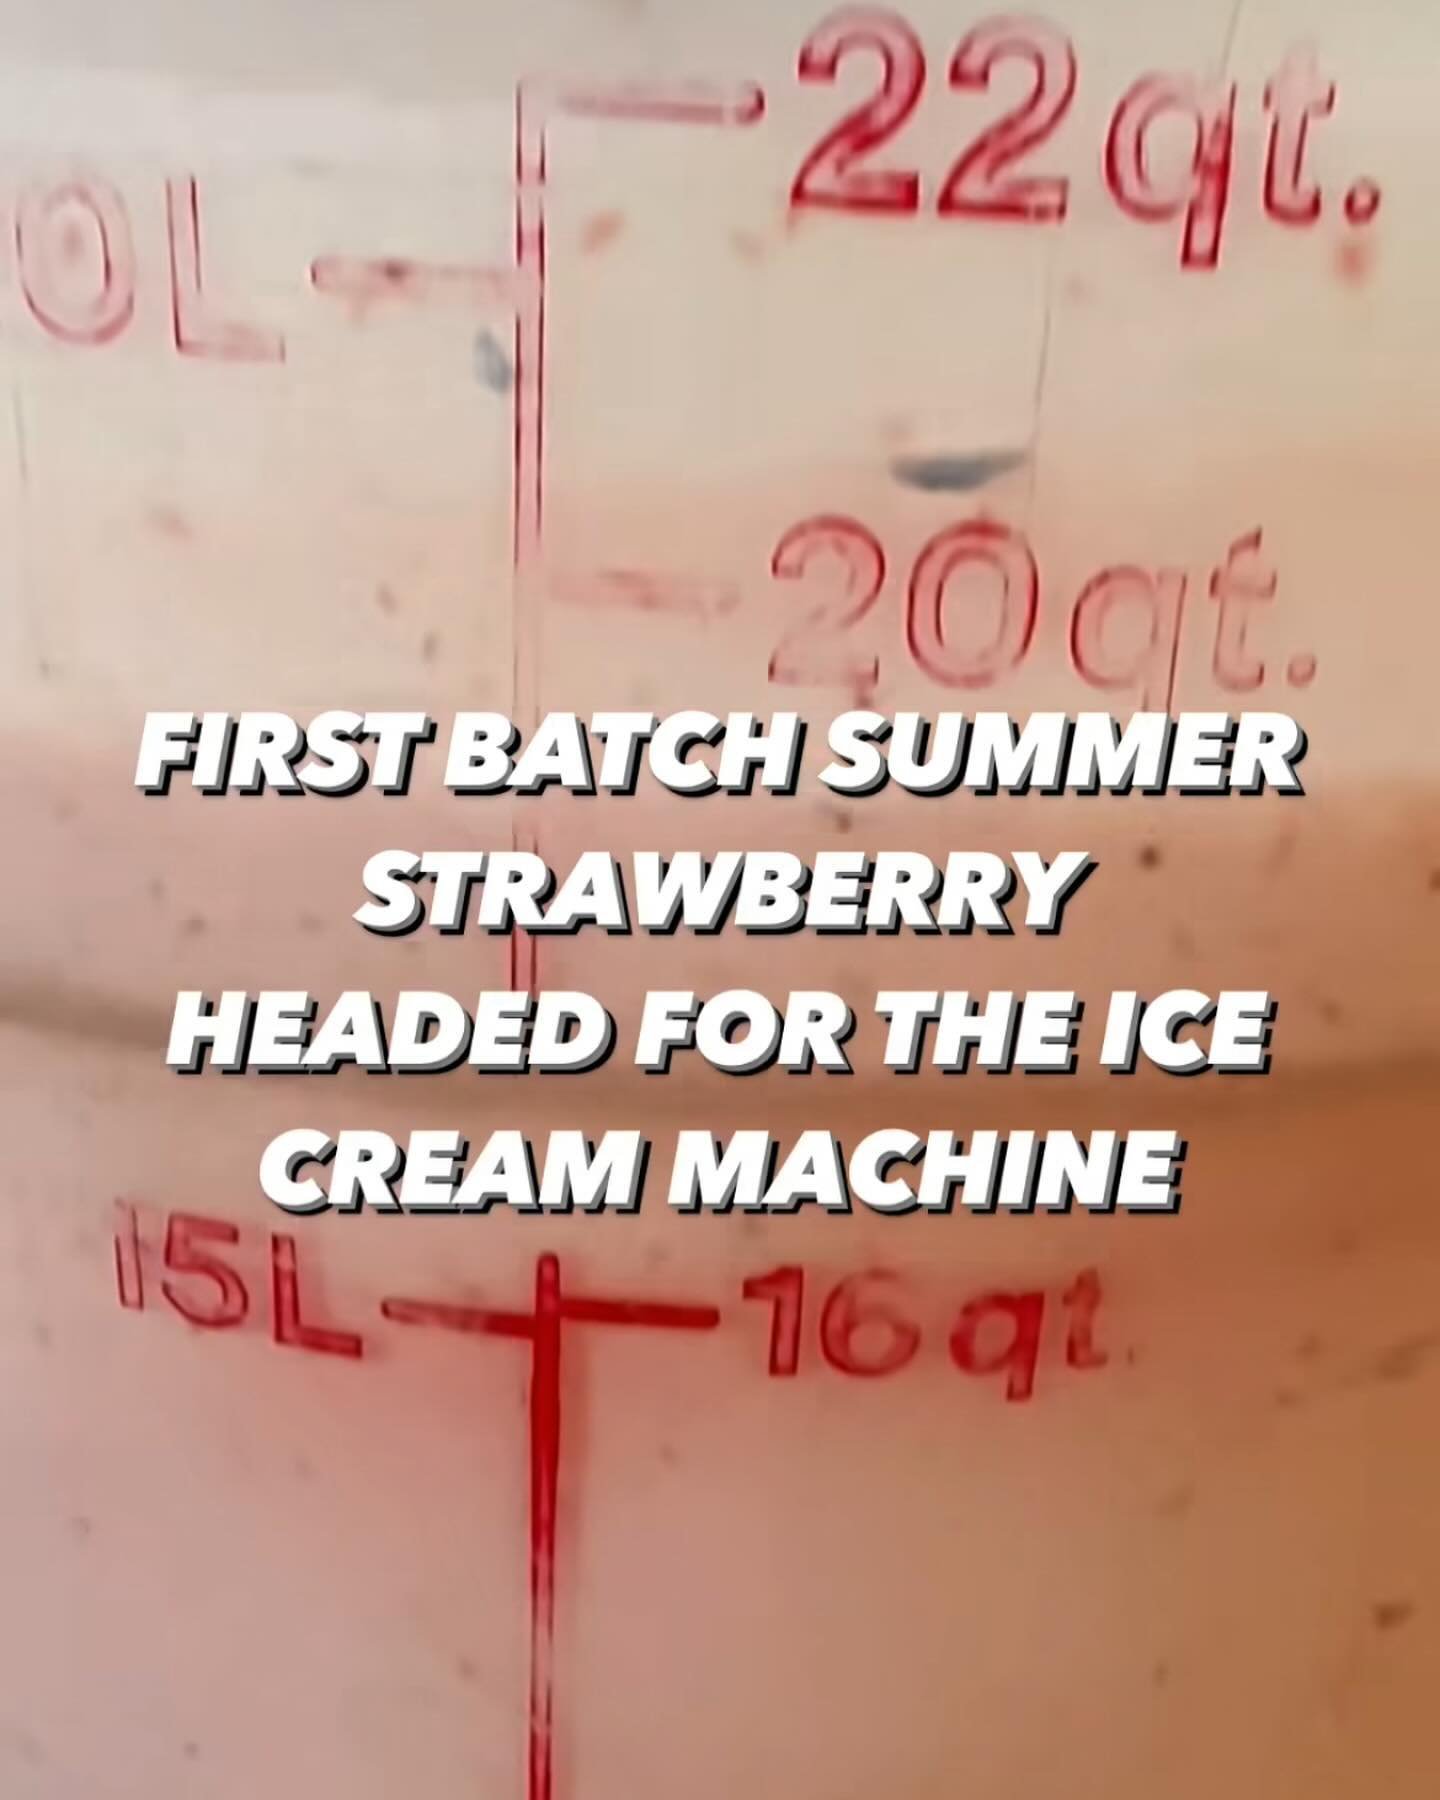 @milksugarlovejc has 20 quarts of #strawberry #icecream coming your way!